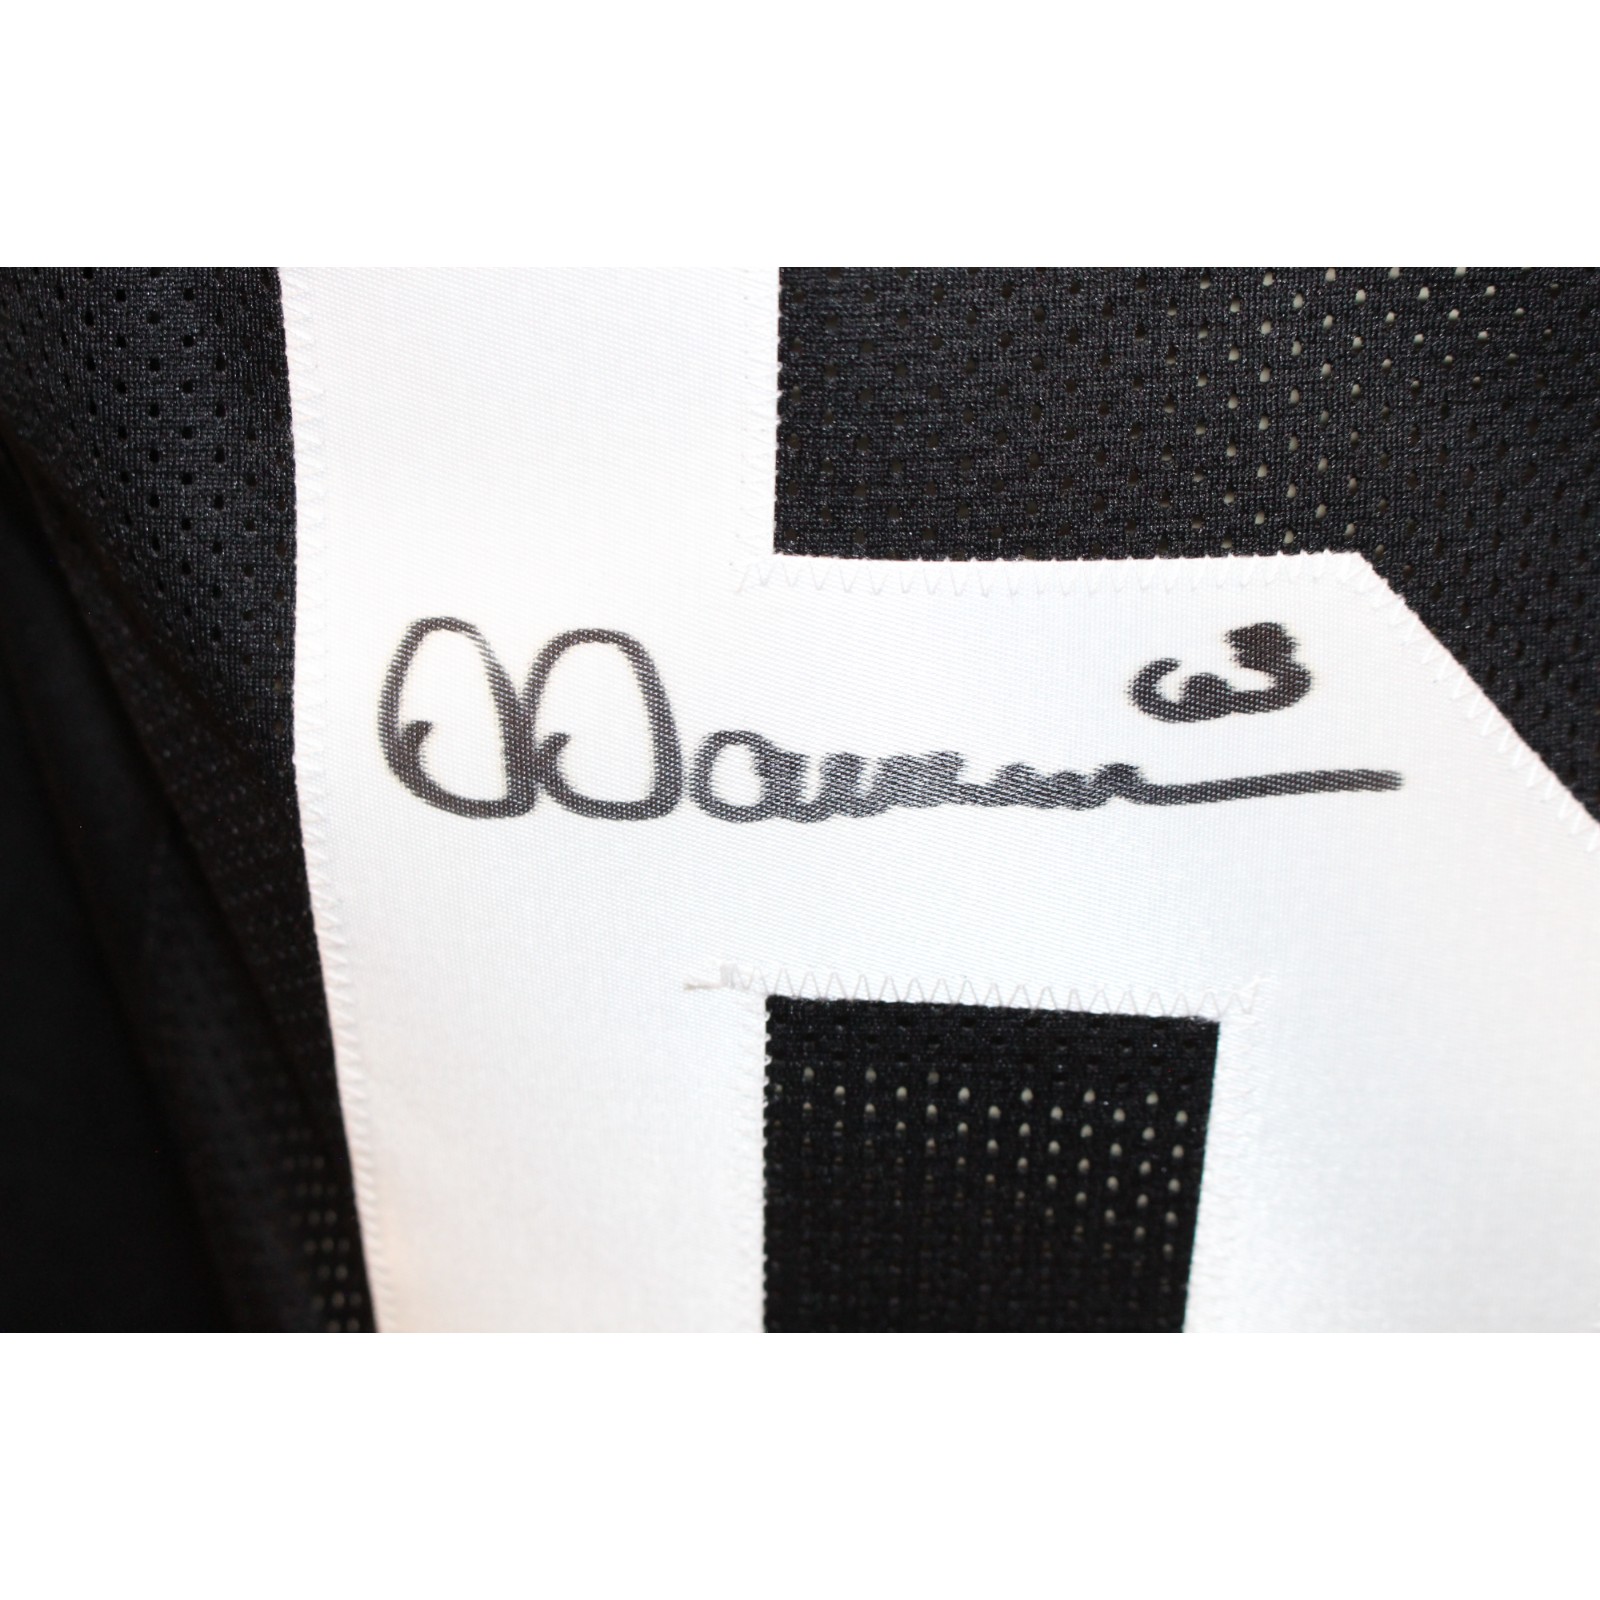 Dermotti Dawson Autographed/Signed Pro Style Black Jersey Beckett